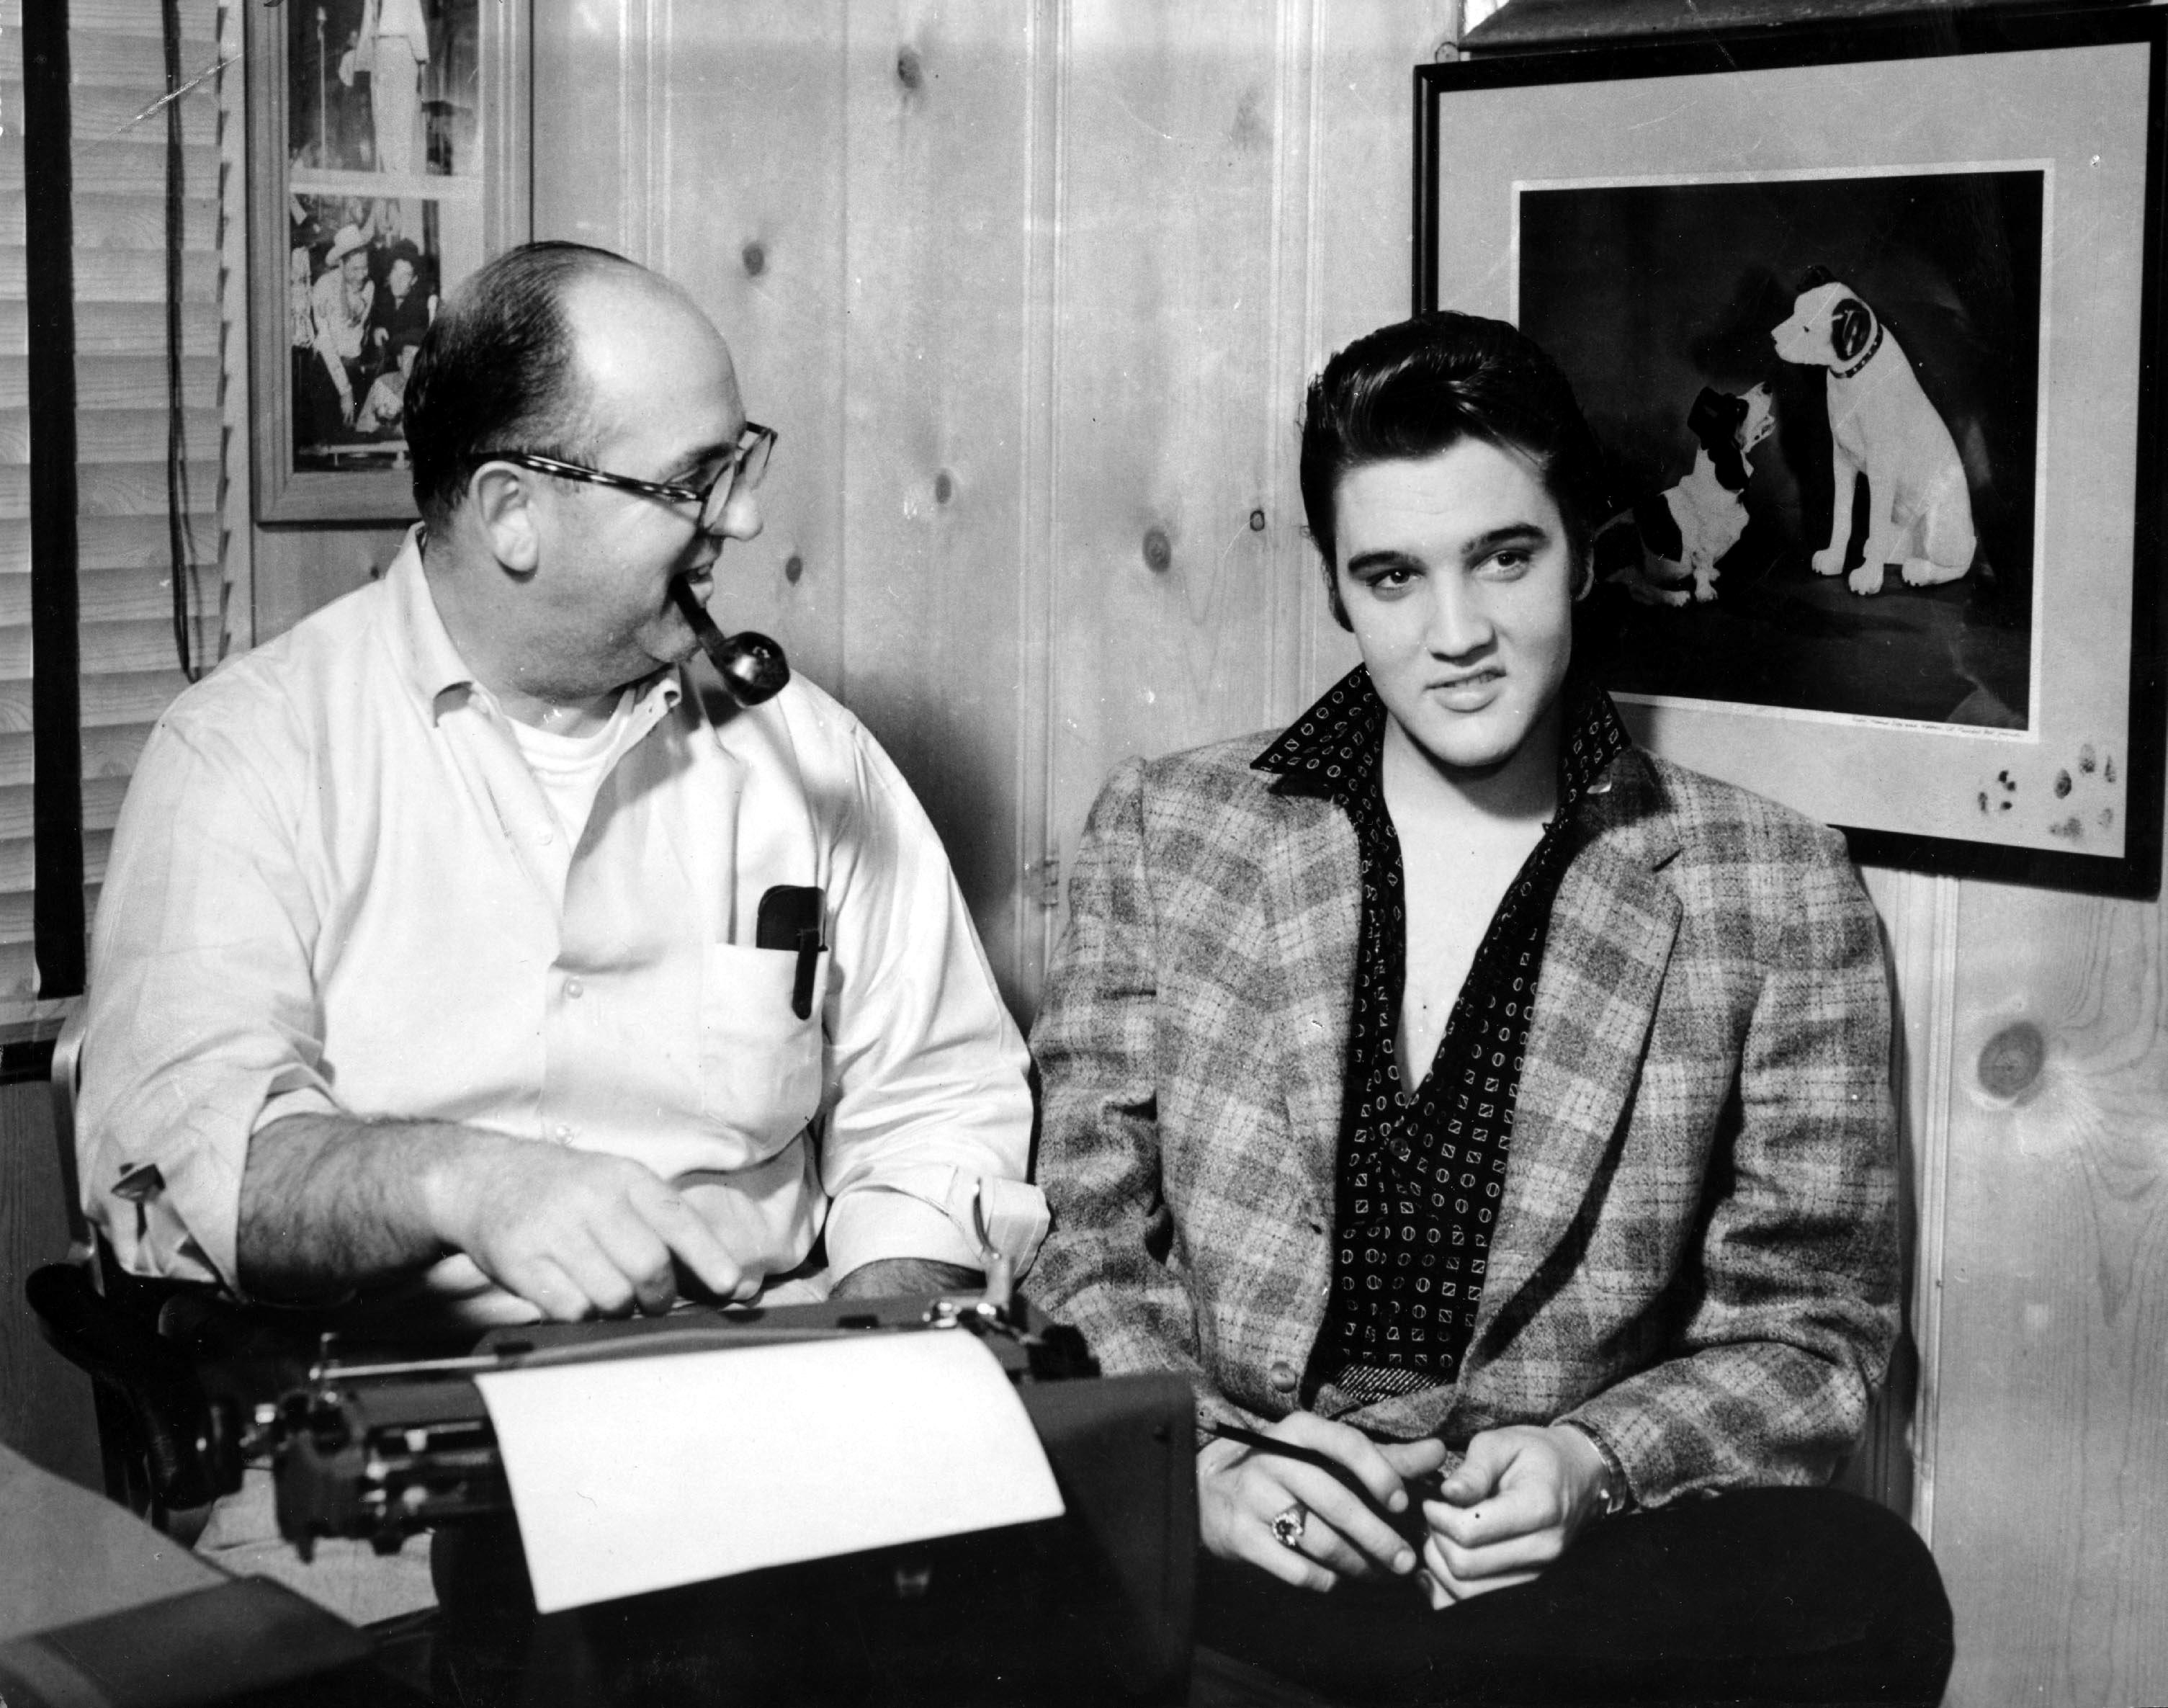 Colonel Tom Parker and Elvis Presley sitting